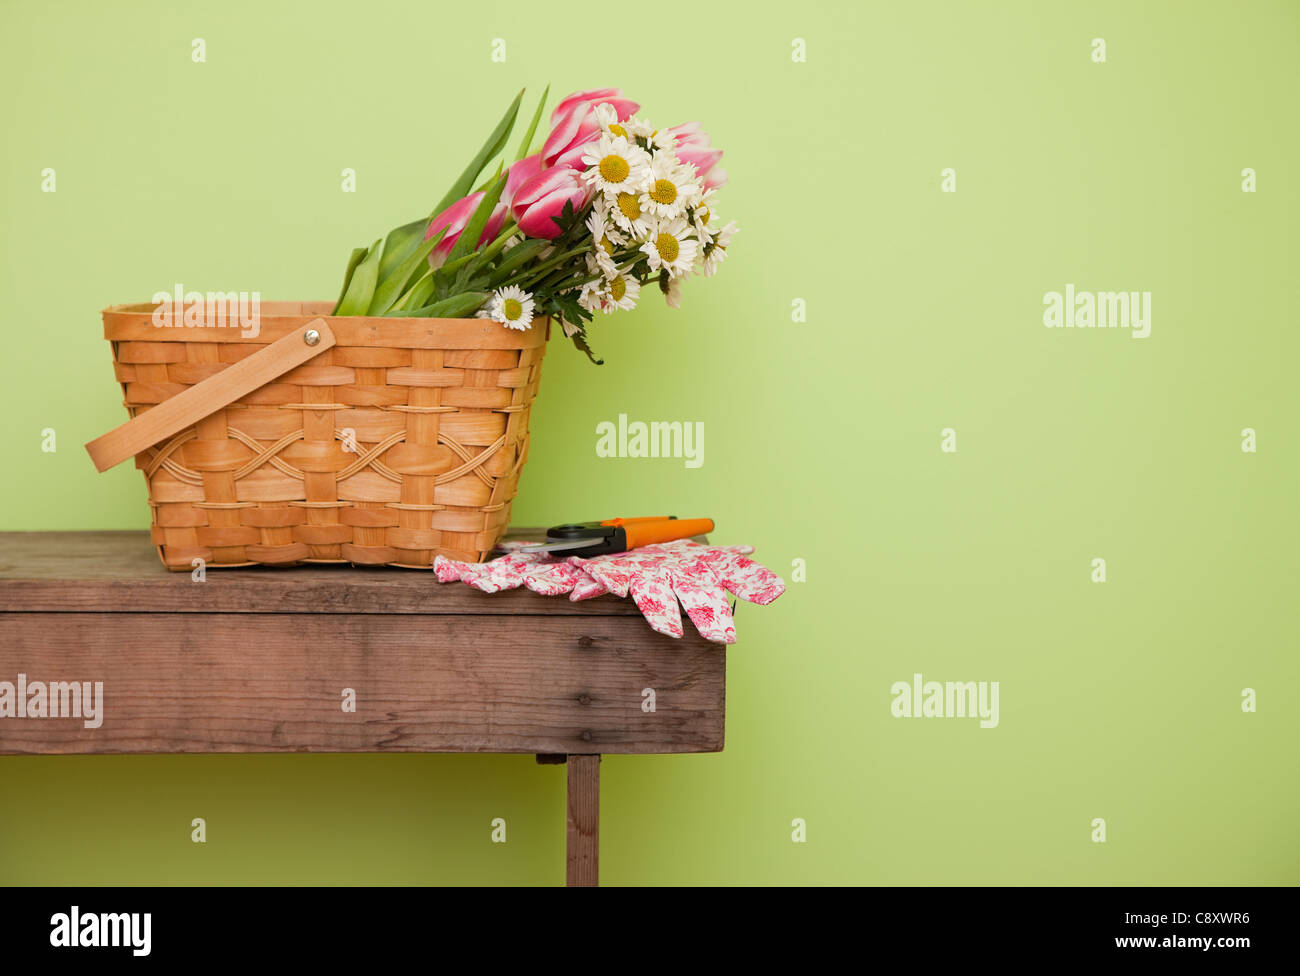 USA, Illinois, Metamora, Wildflowers in basket on table Stock Photo